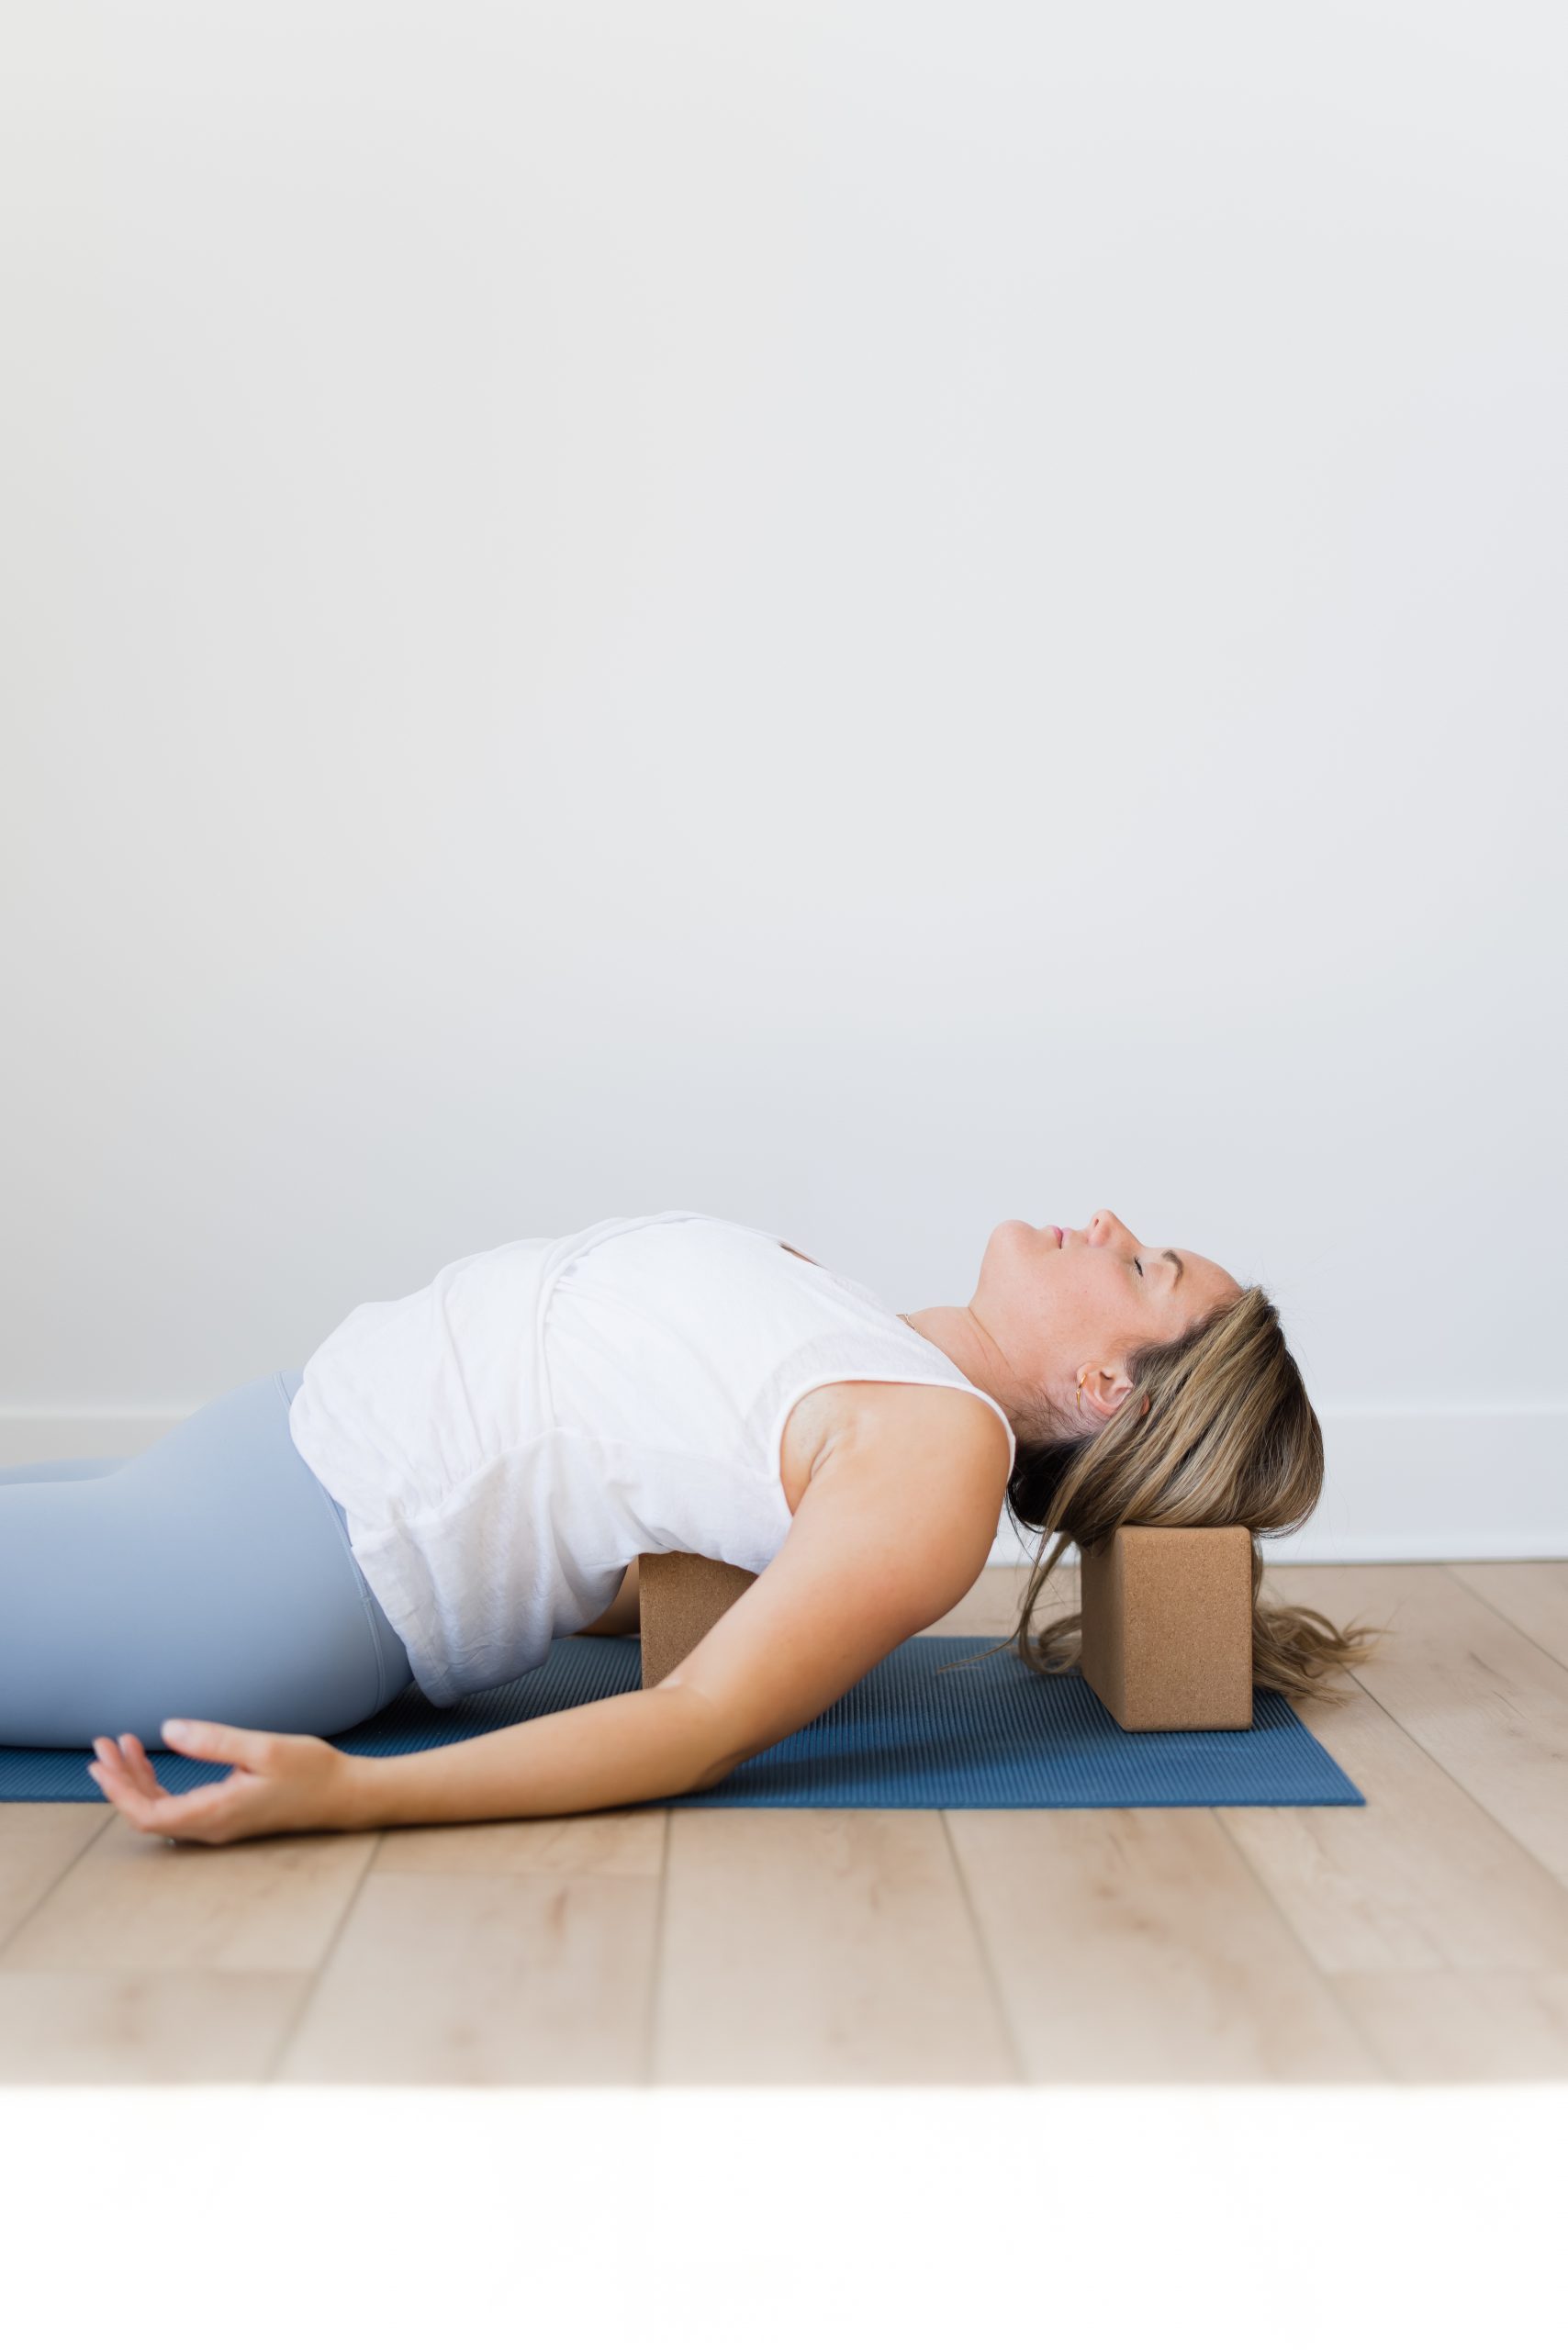 Restorative yoga — YOGARU